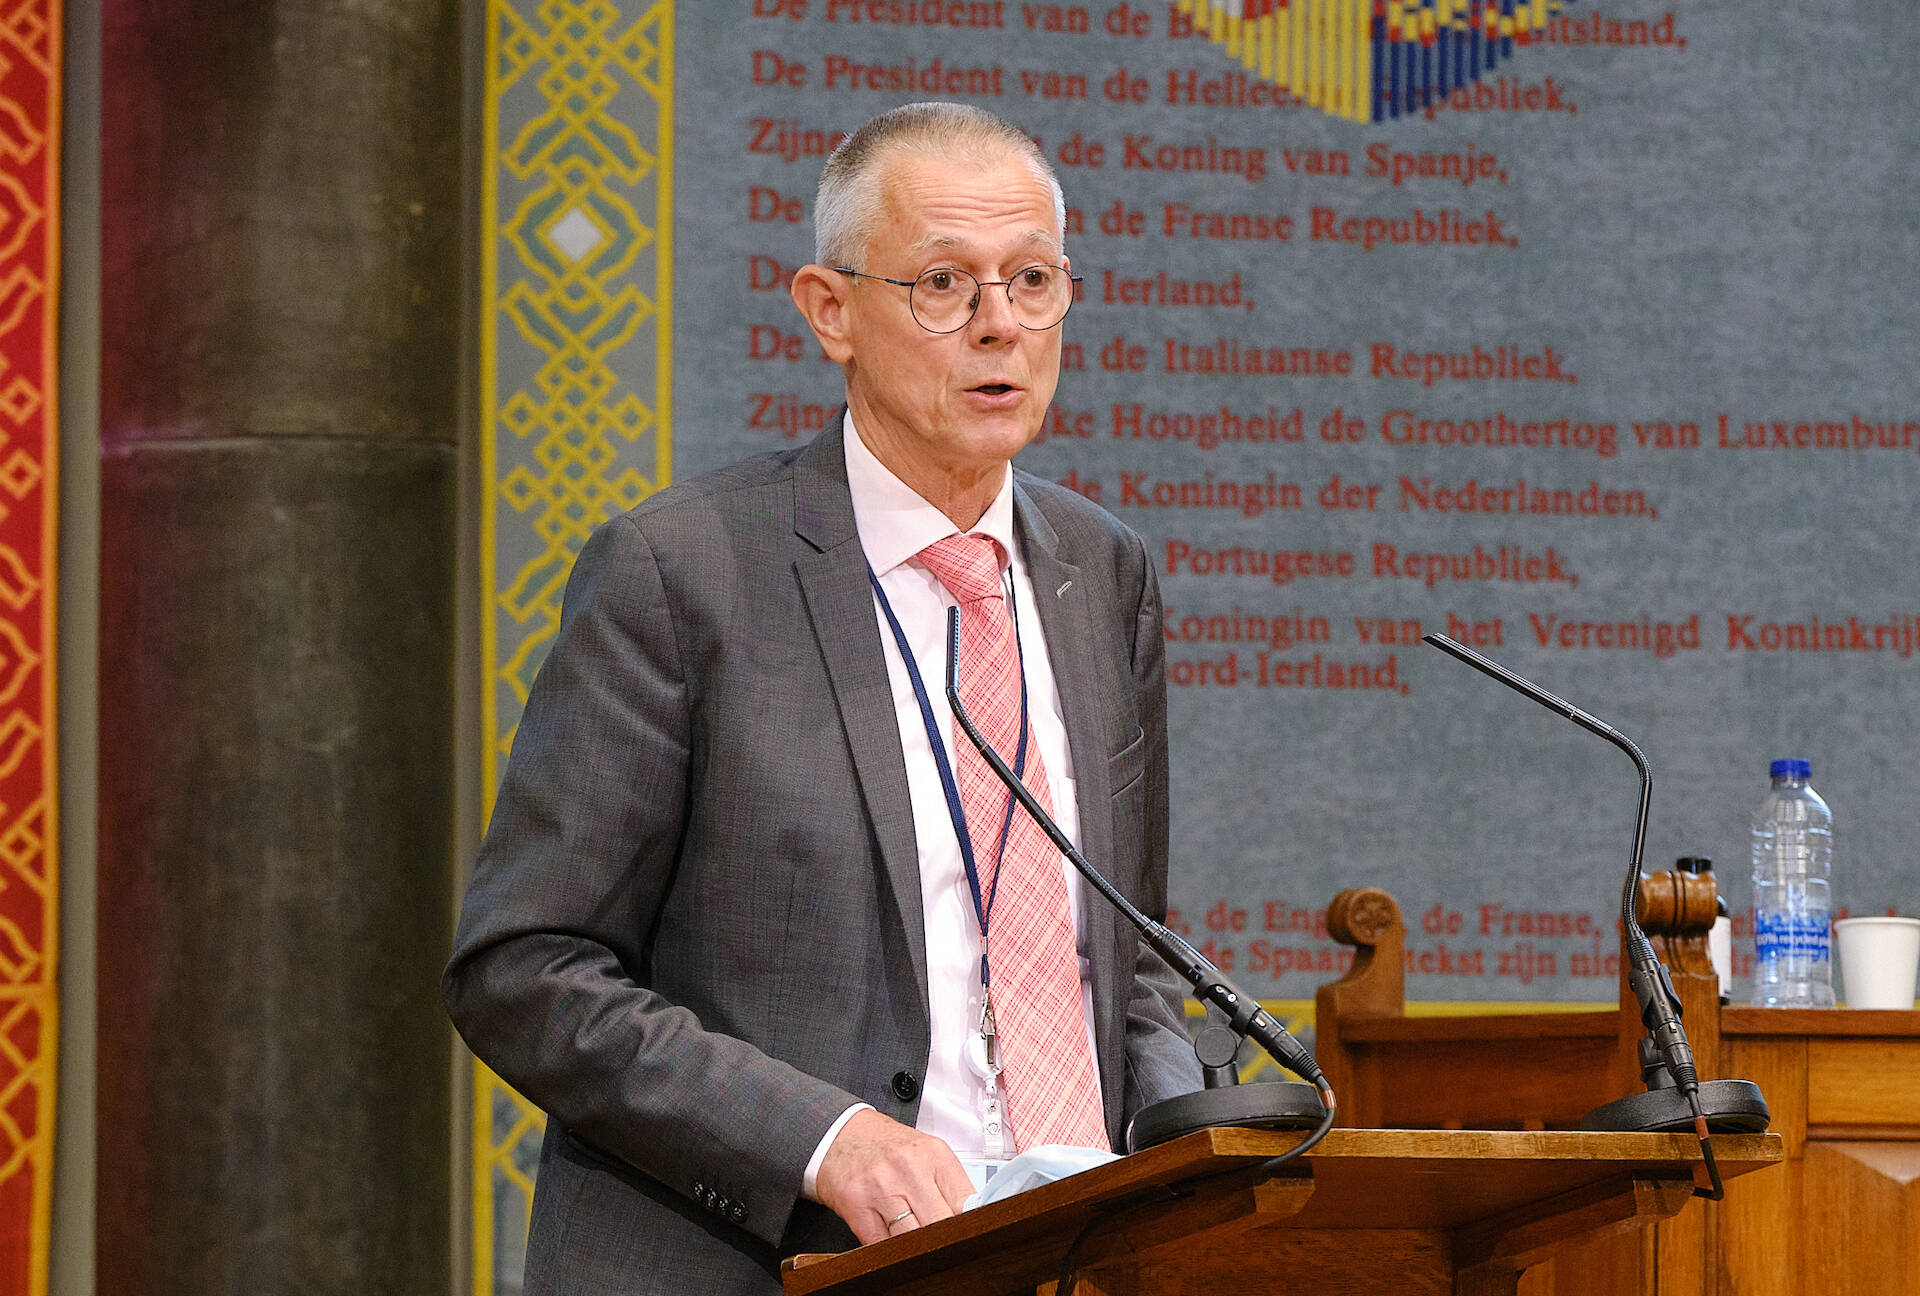 Senator Verkerk (ChristenUnie)